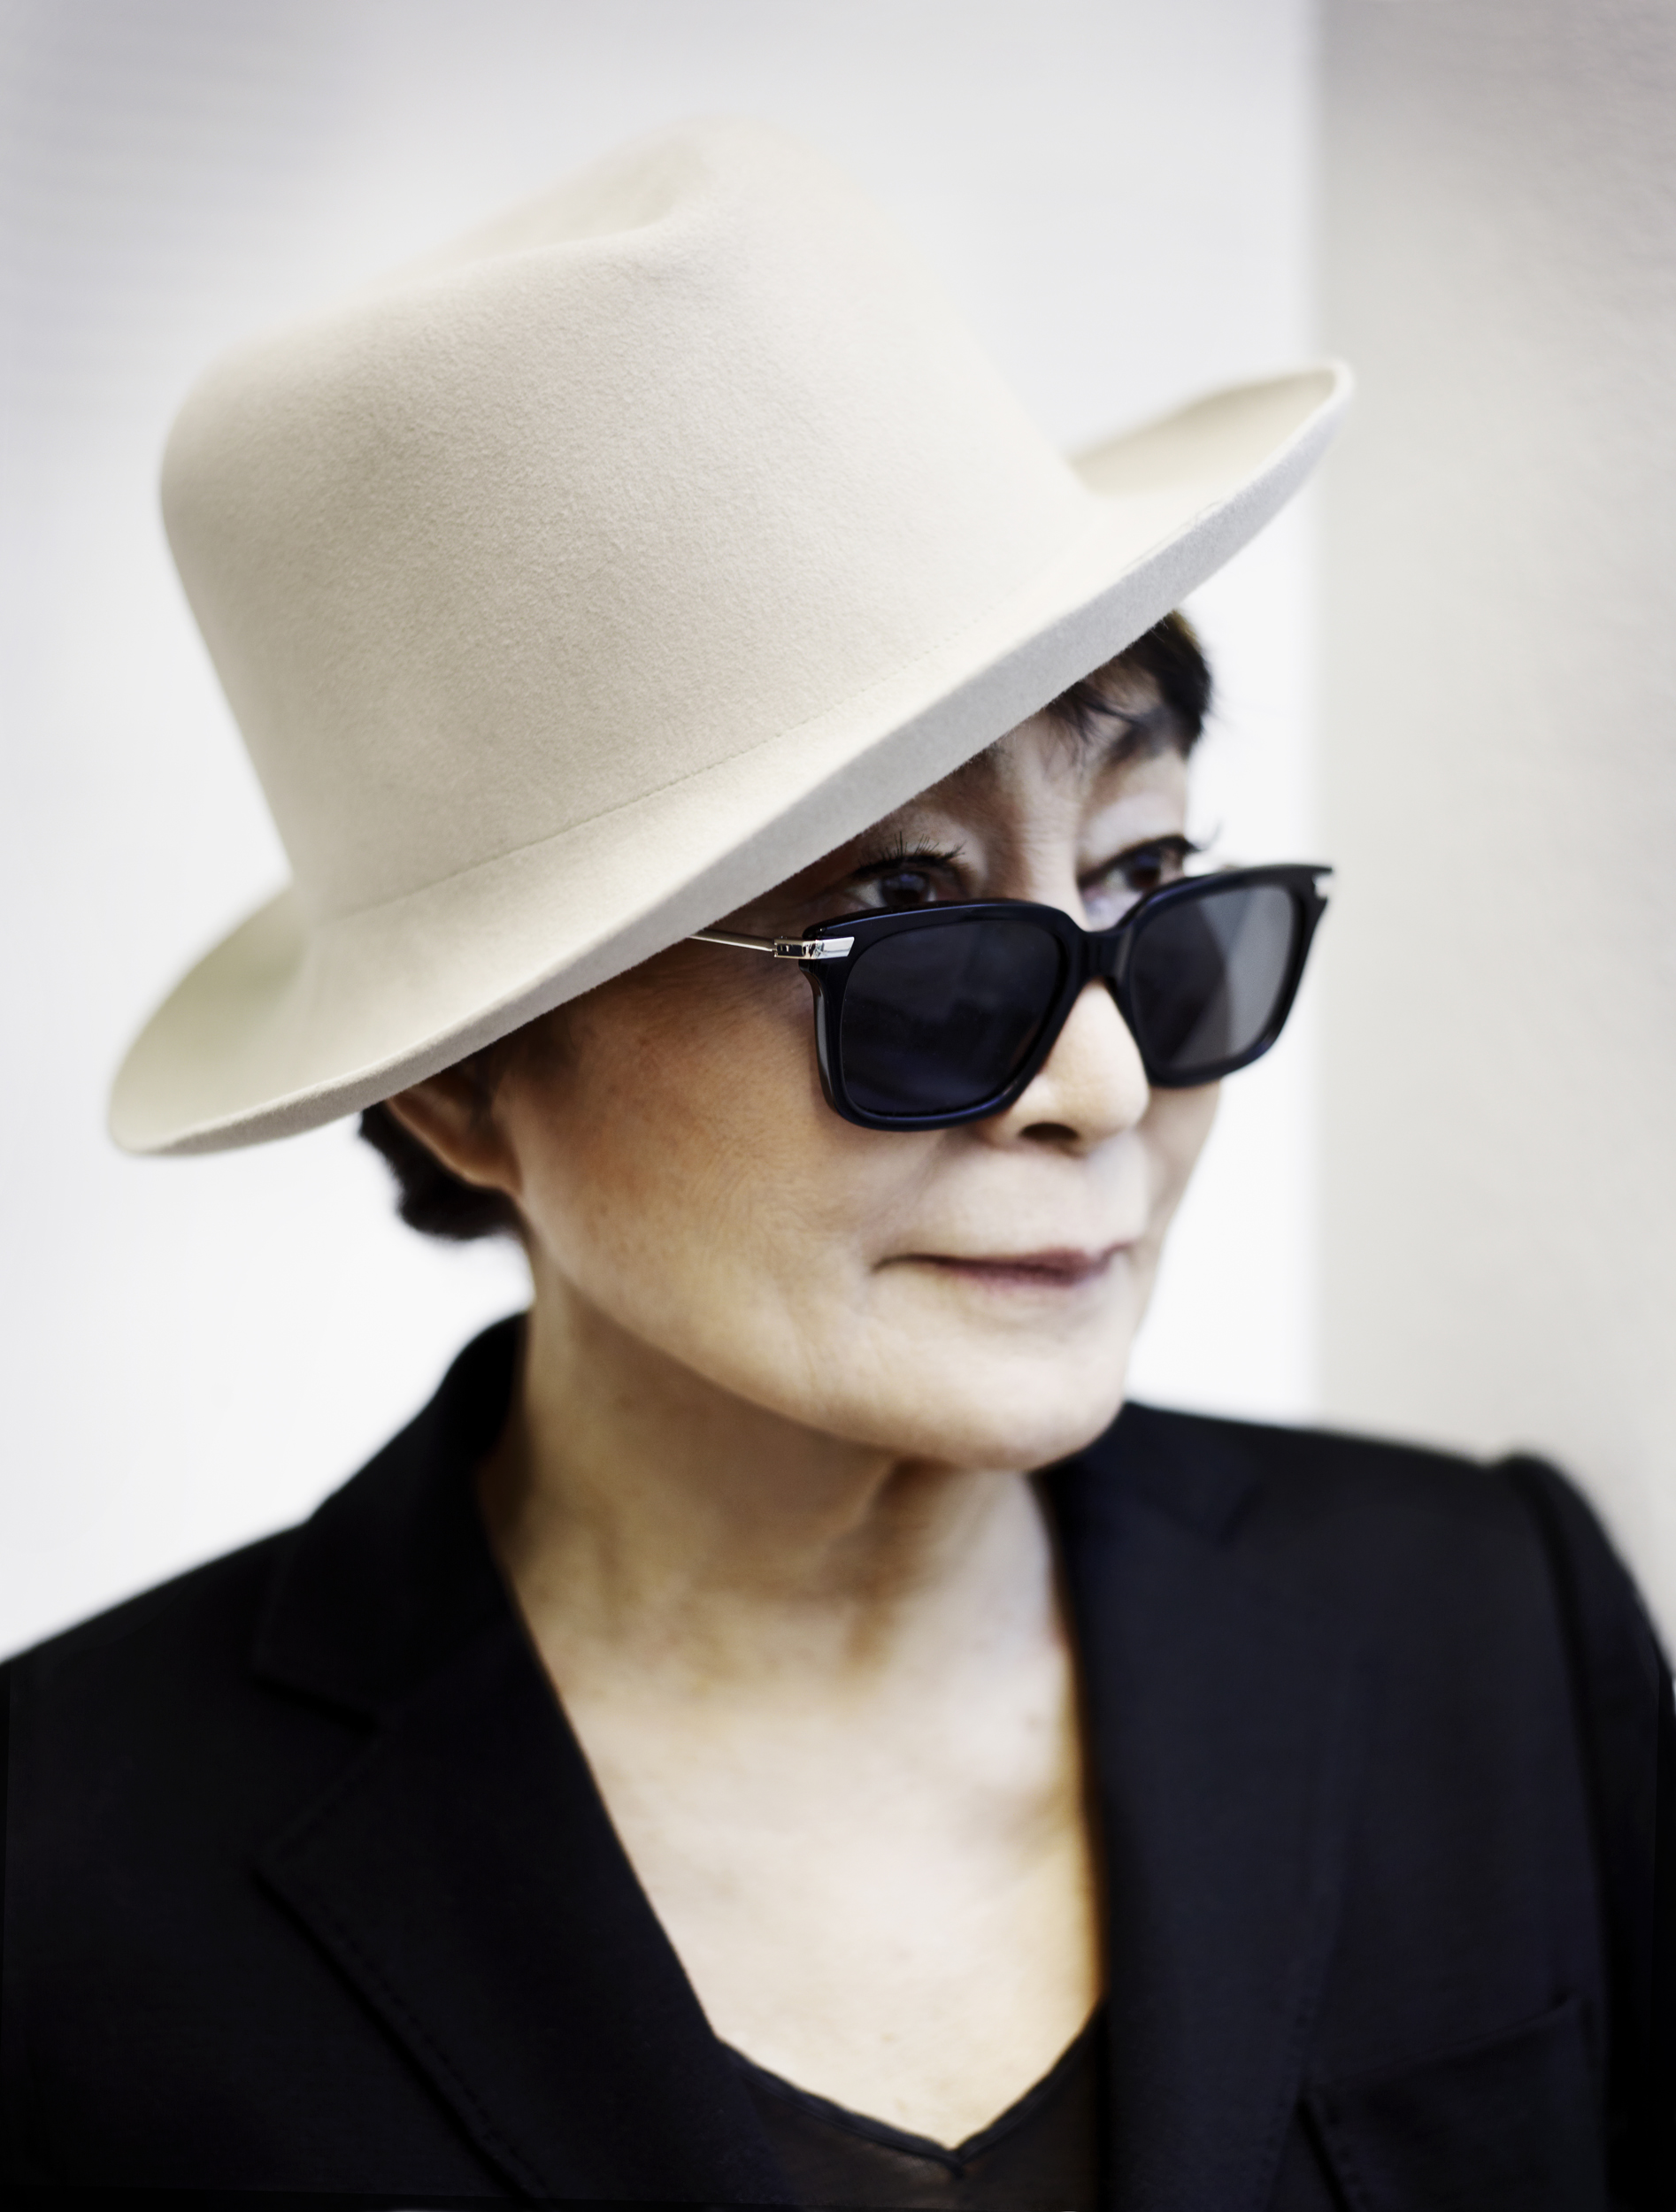 Arising - A Call: Йоко Оно посвящает фотопроект дискриминации женщин